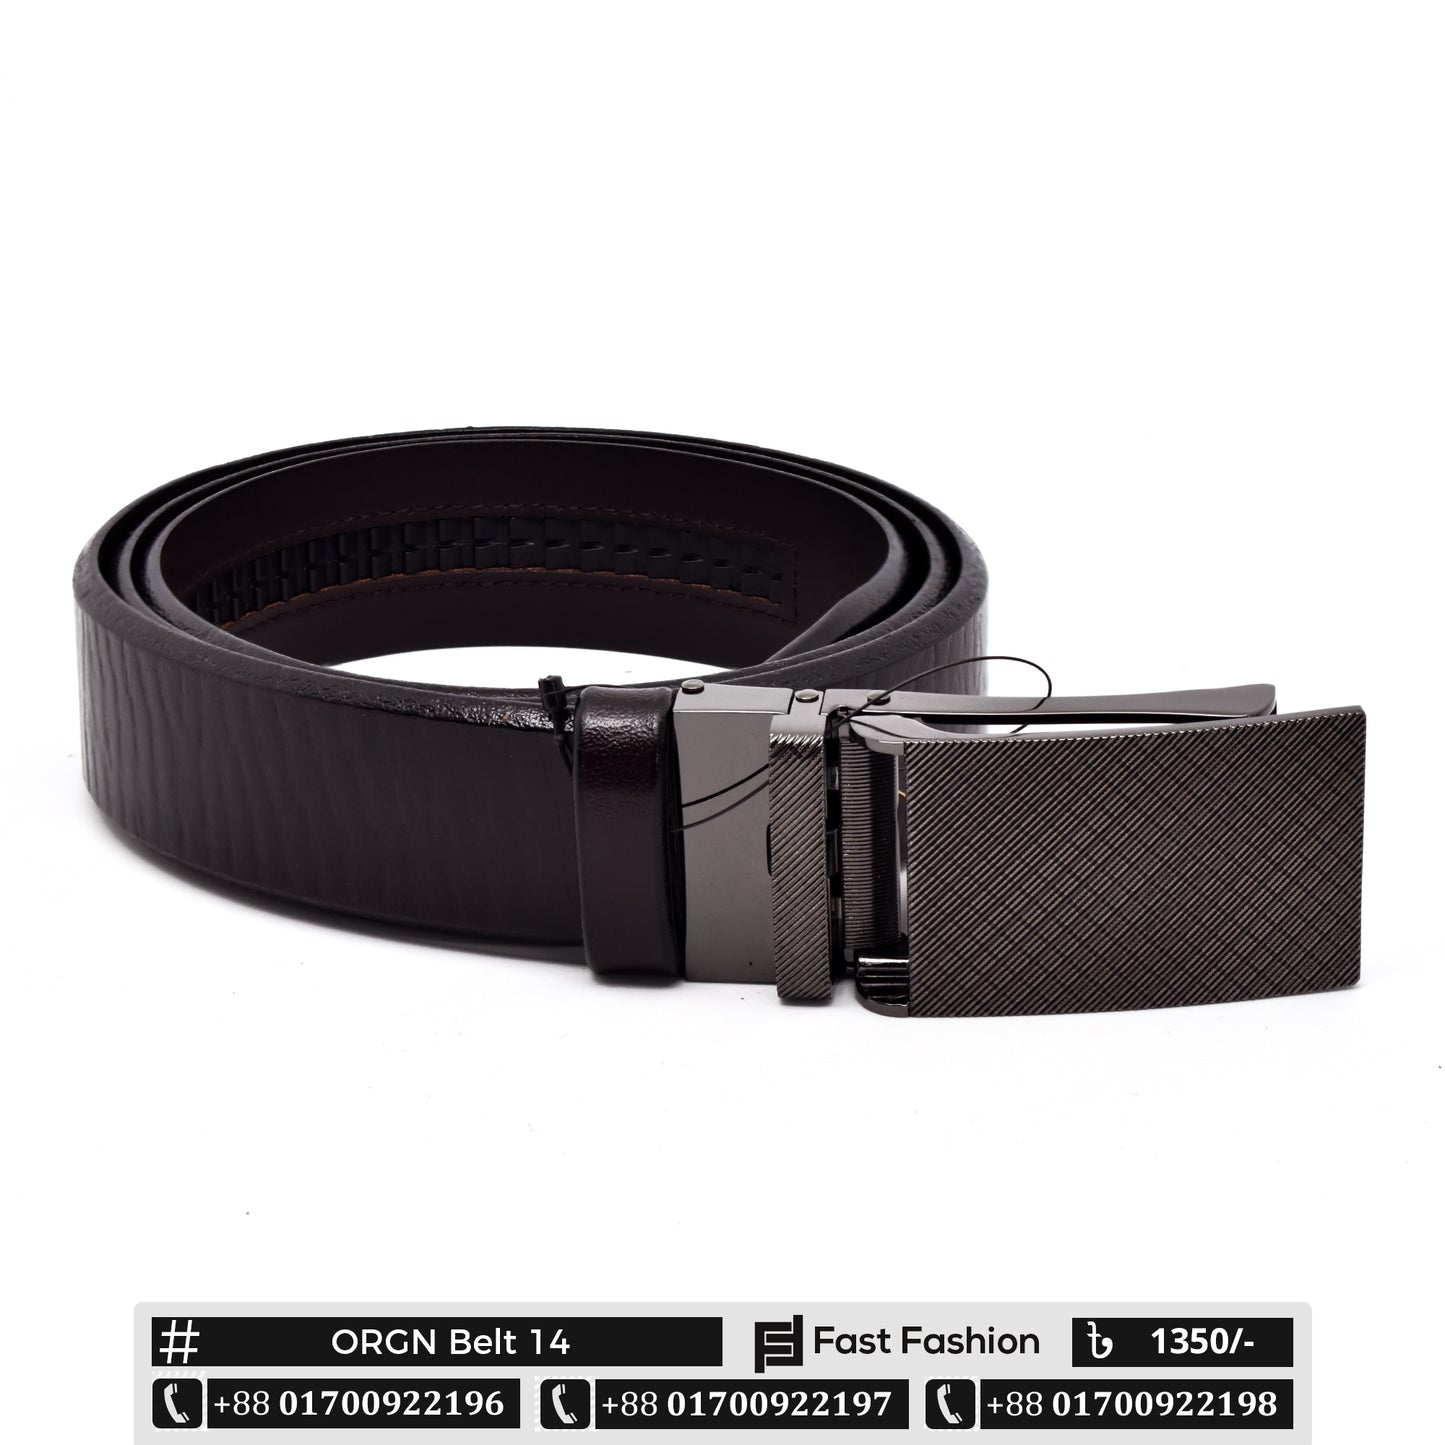 Premium Quality Original Leather Belt - ORGN Belt 14